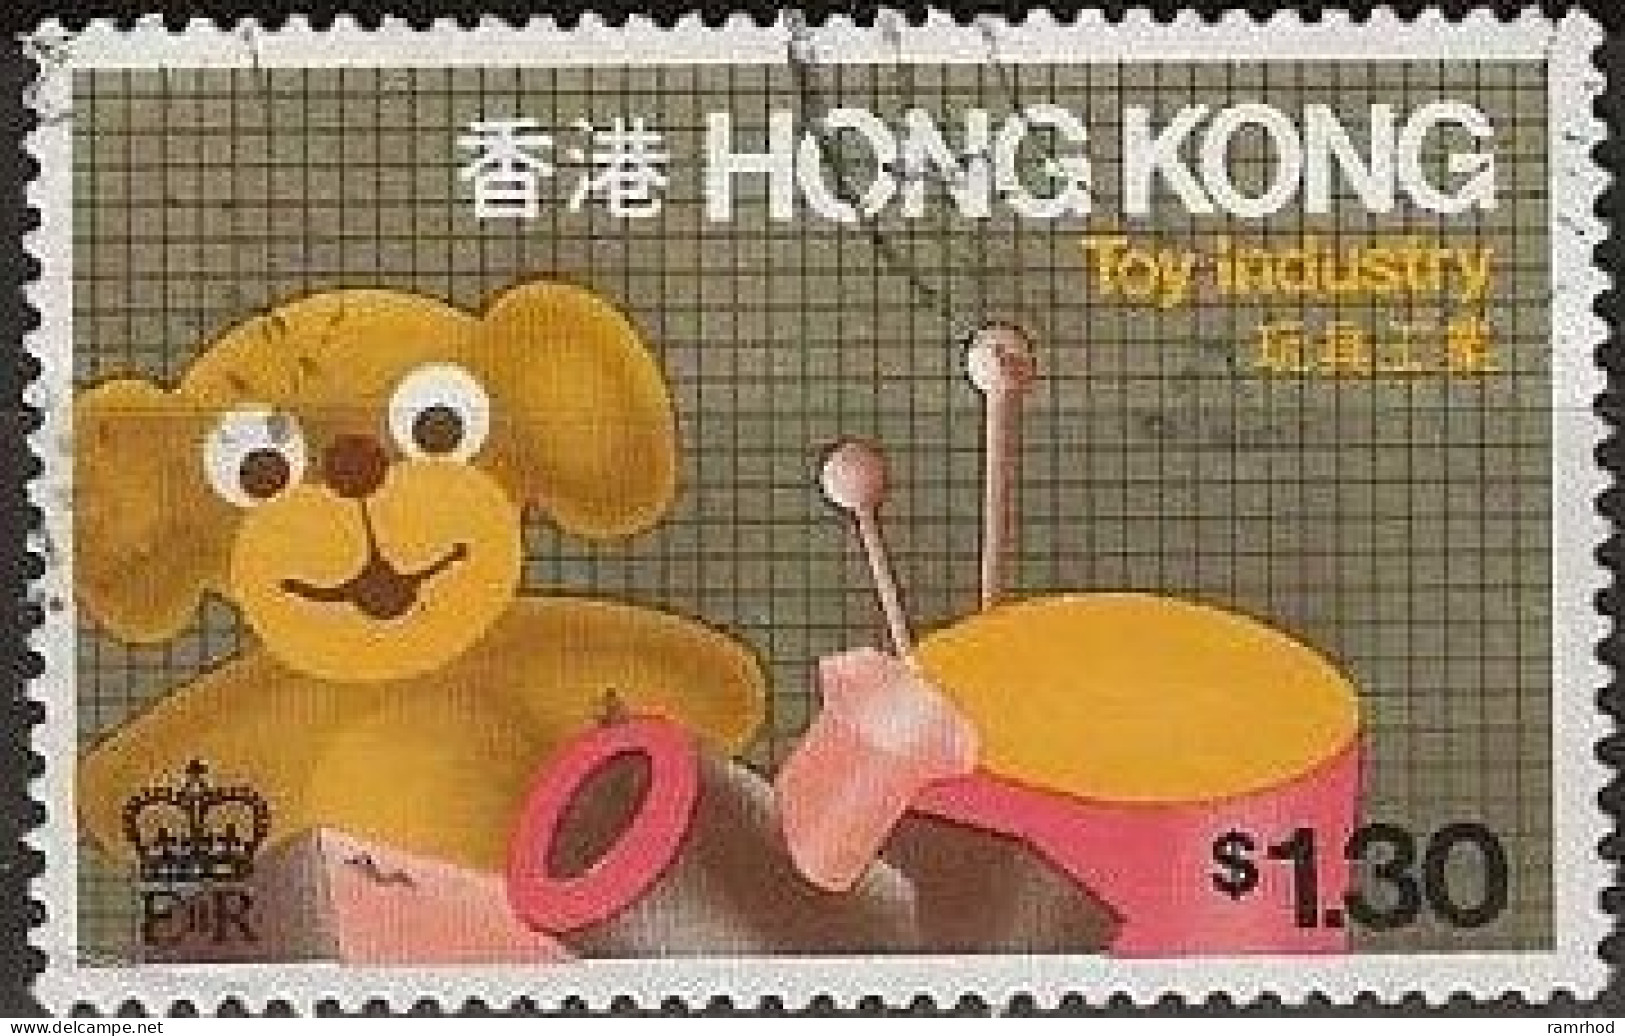 HONG KONG 1979 Hong Kong Industries - $1.30, Toy Industry FU - Oblitérés